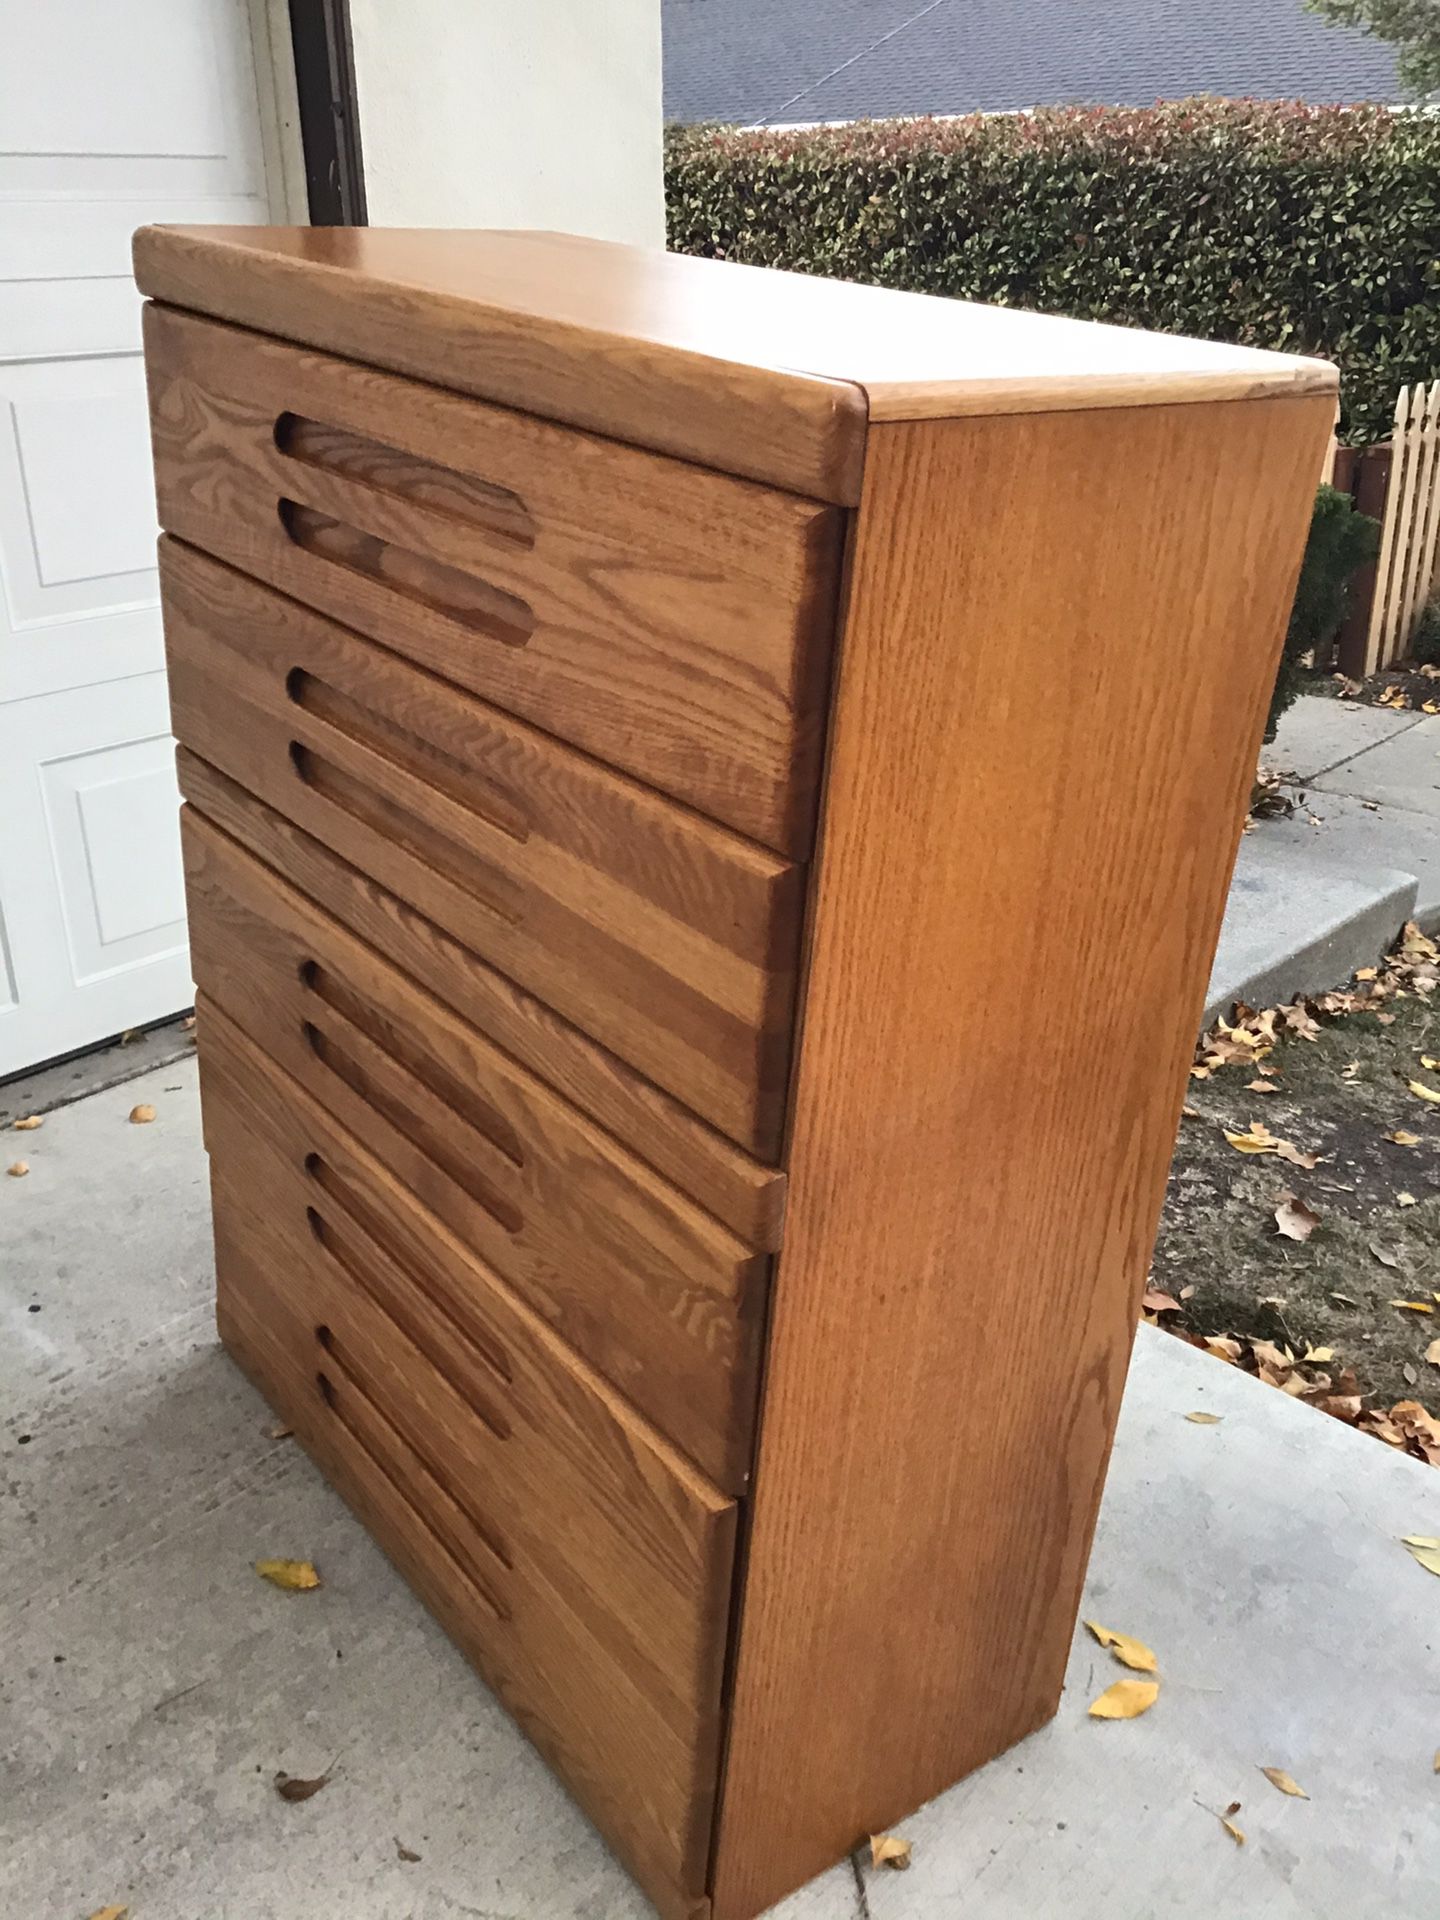 Nice Dresser solid Wood Very Sturdy